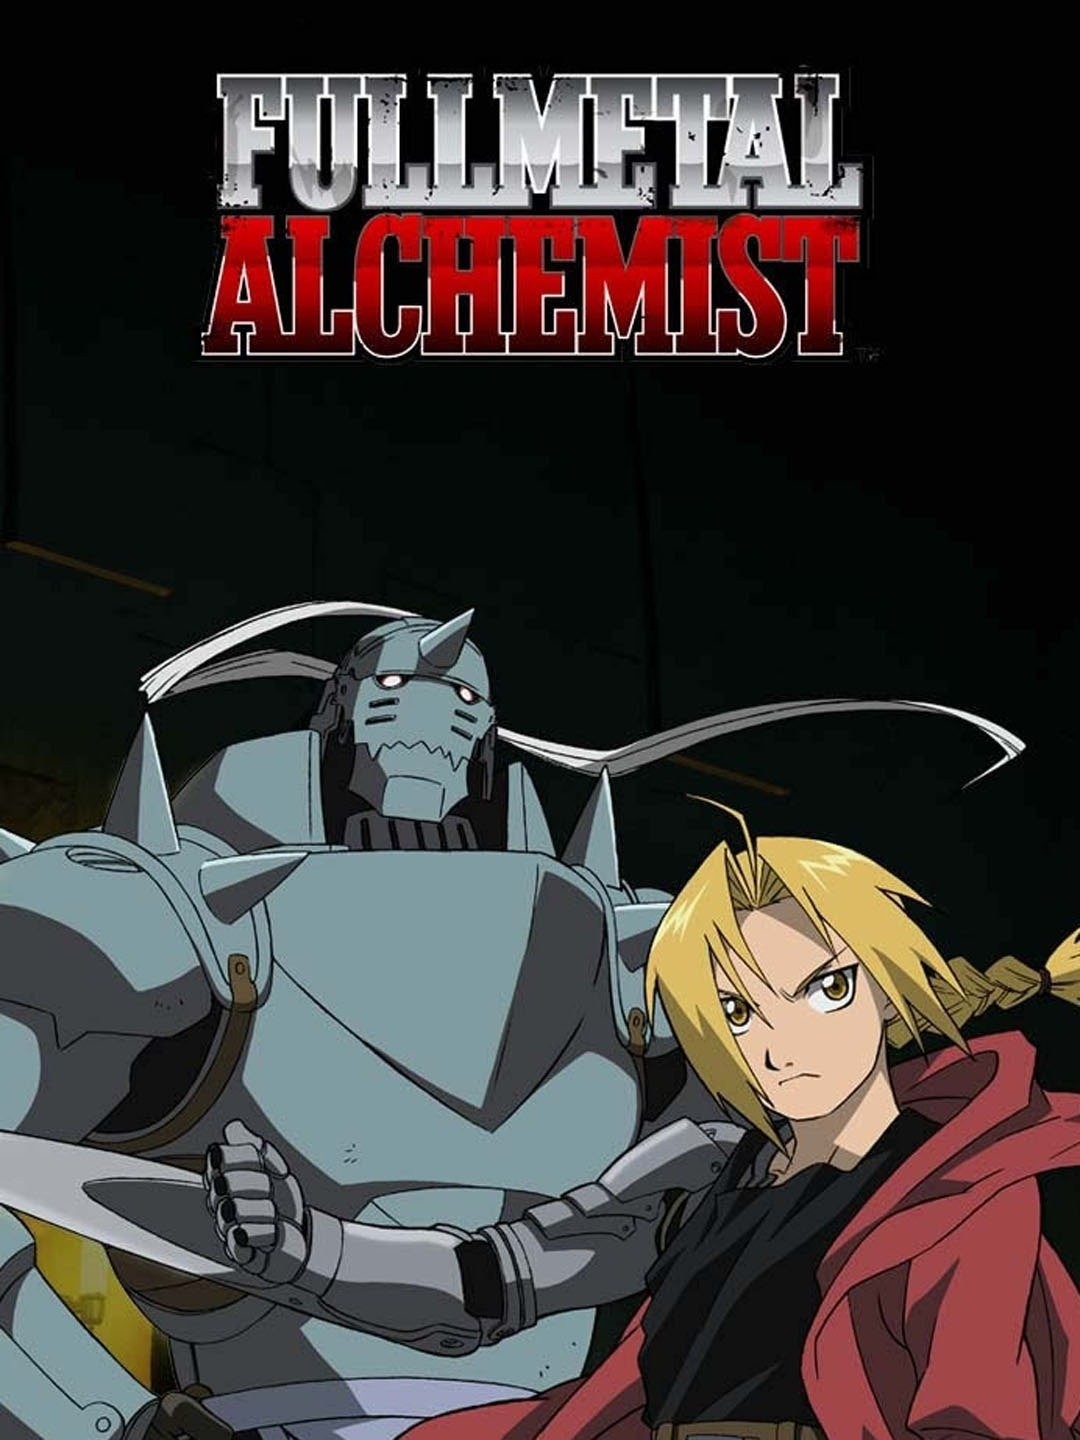 Fullmetal Alchemist (2003) - Seiji Mizushima, User Reviews